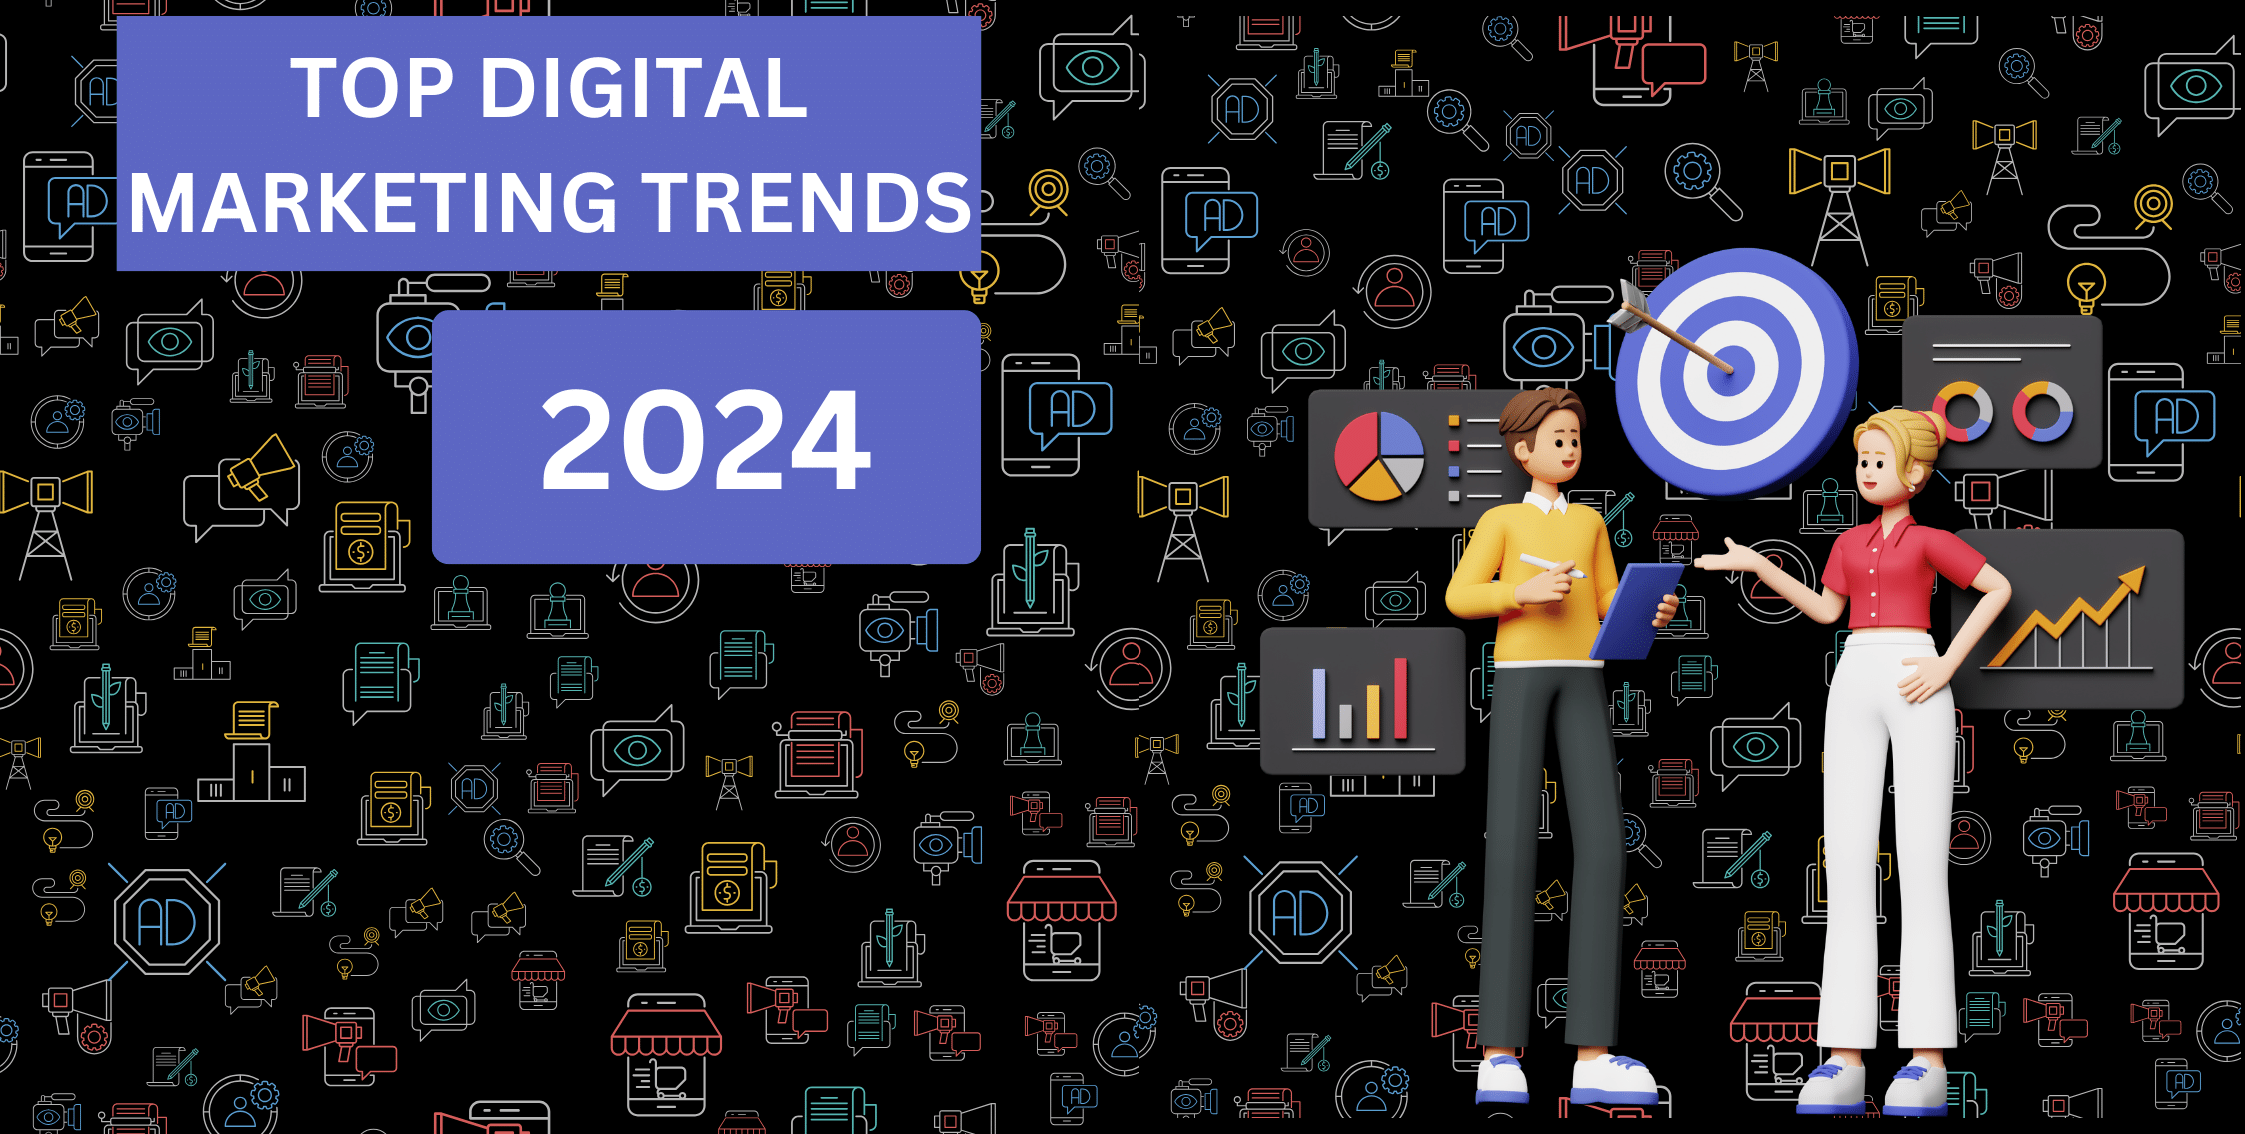 Top Digital Marketing Trends 2024